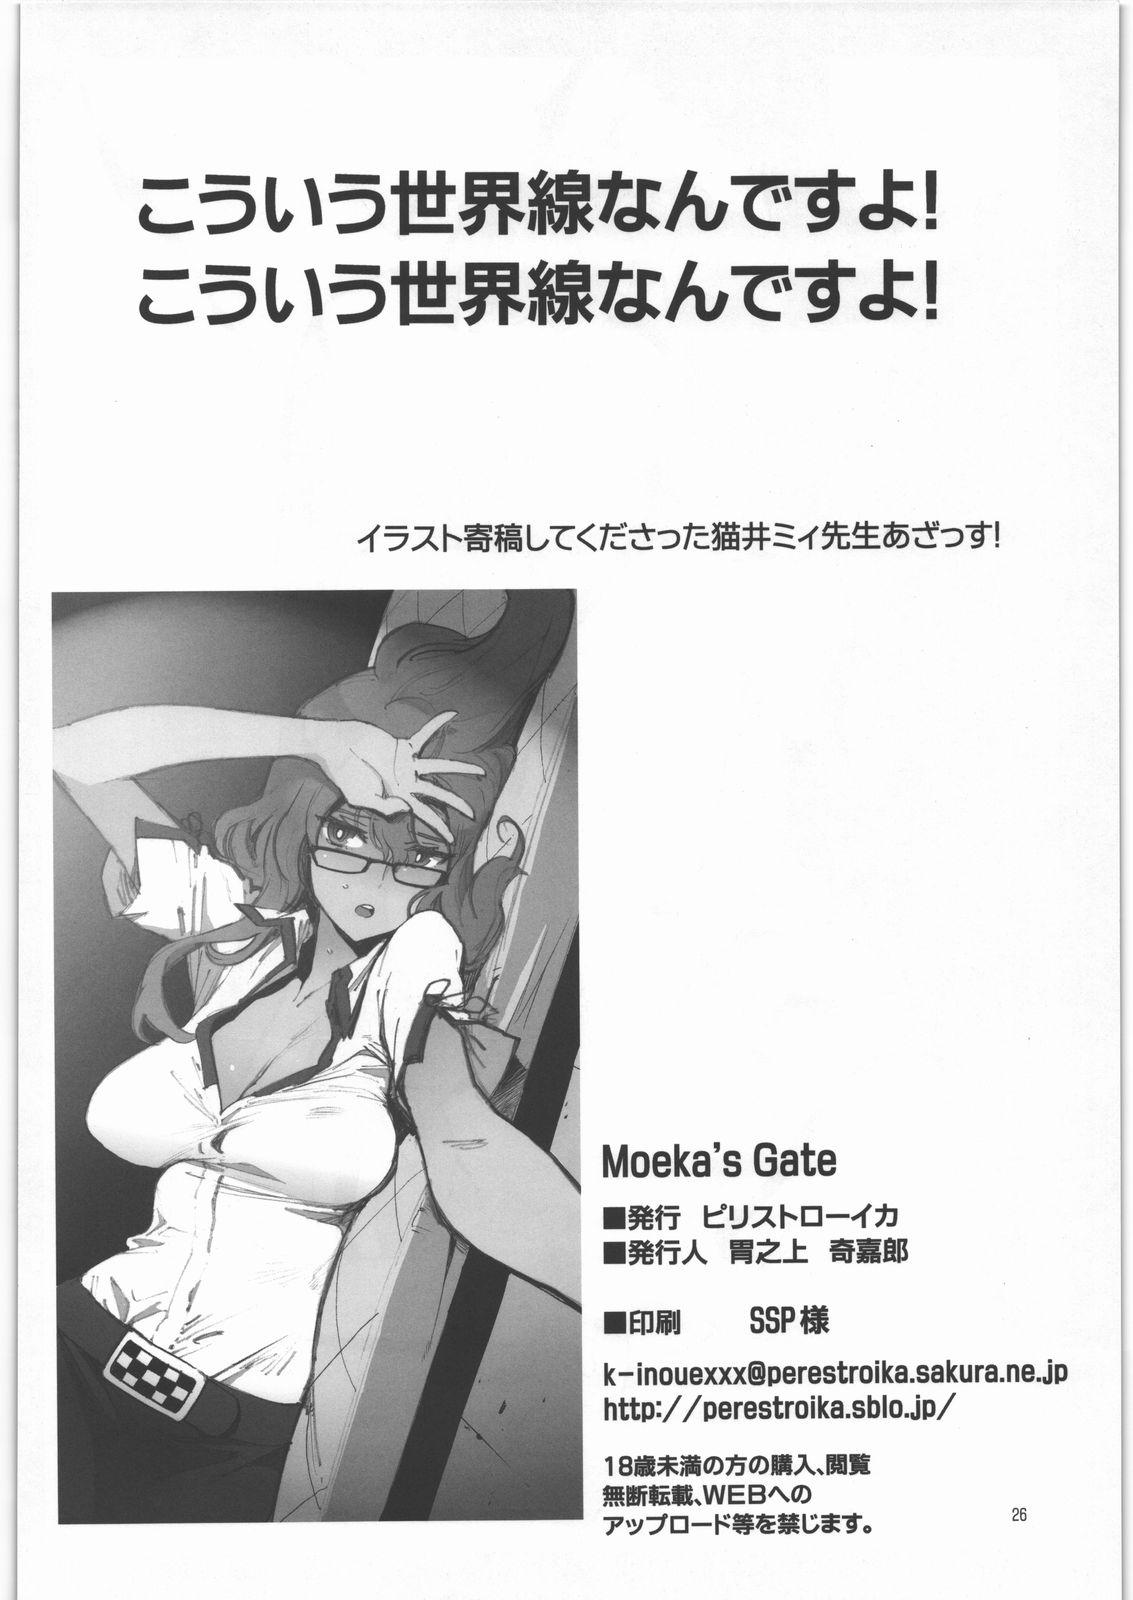 Girlsfucking Moeka's Gate - Steinsgate Show - Page 25